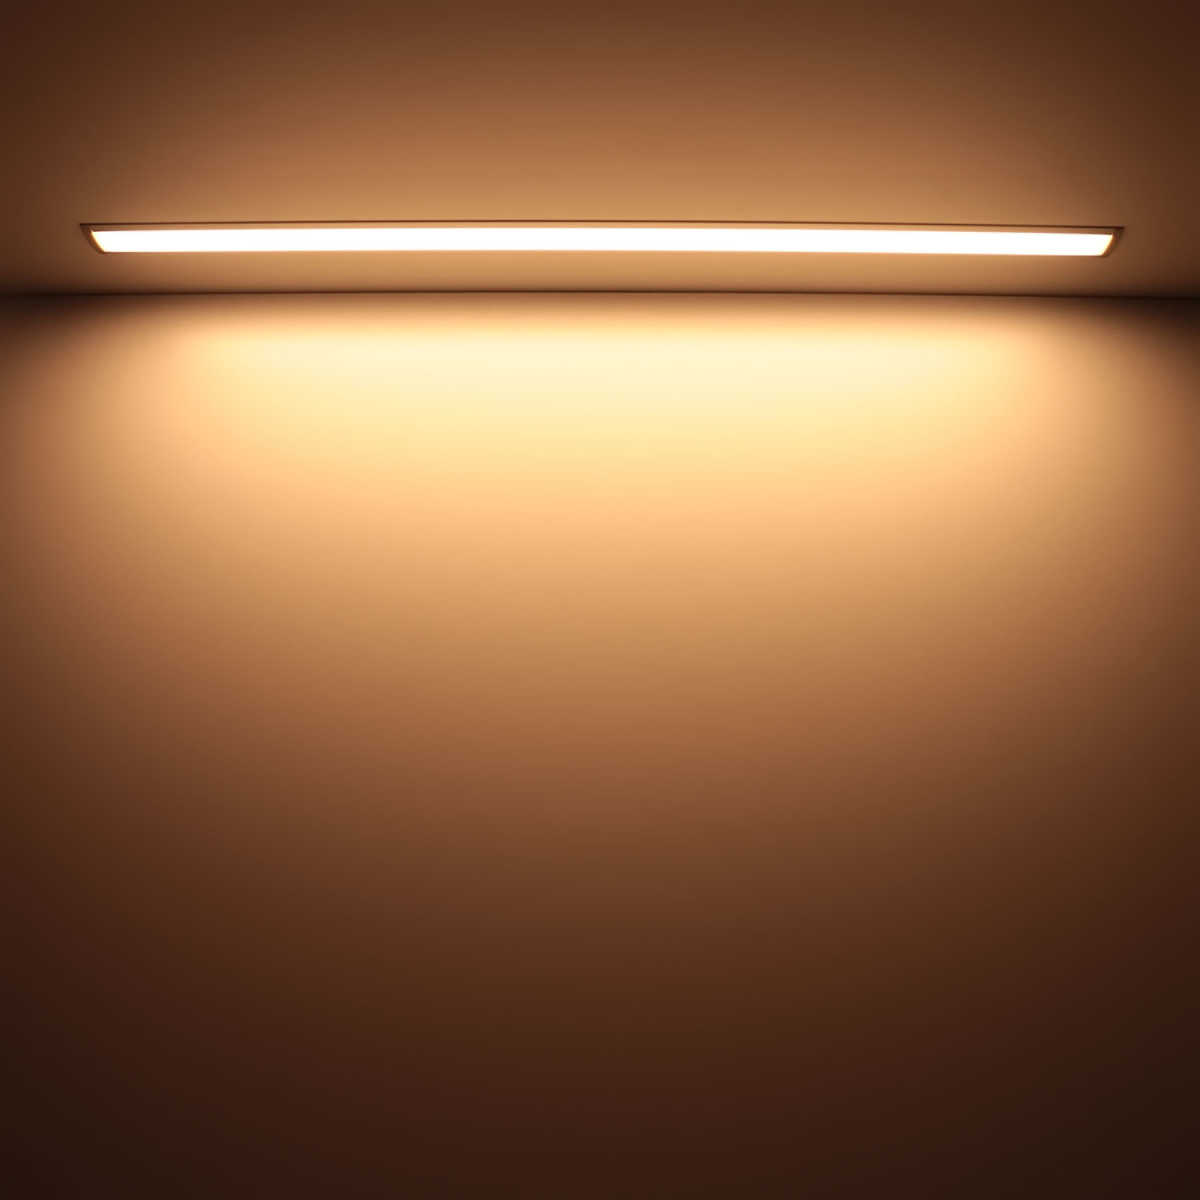 Double Line LED-Einbauleuchte "Recessed" | diffus | 140x 5630 LEDs | 30 Watt - 2782 Lumen je Meter | warmweiß | CRI 90+ 24VDC 120° |